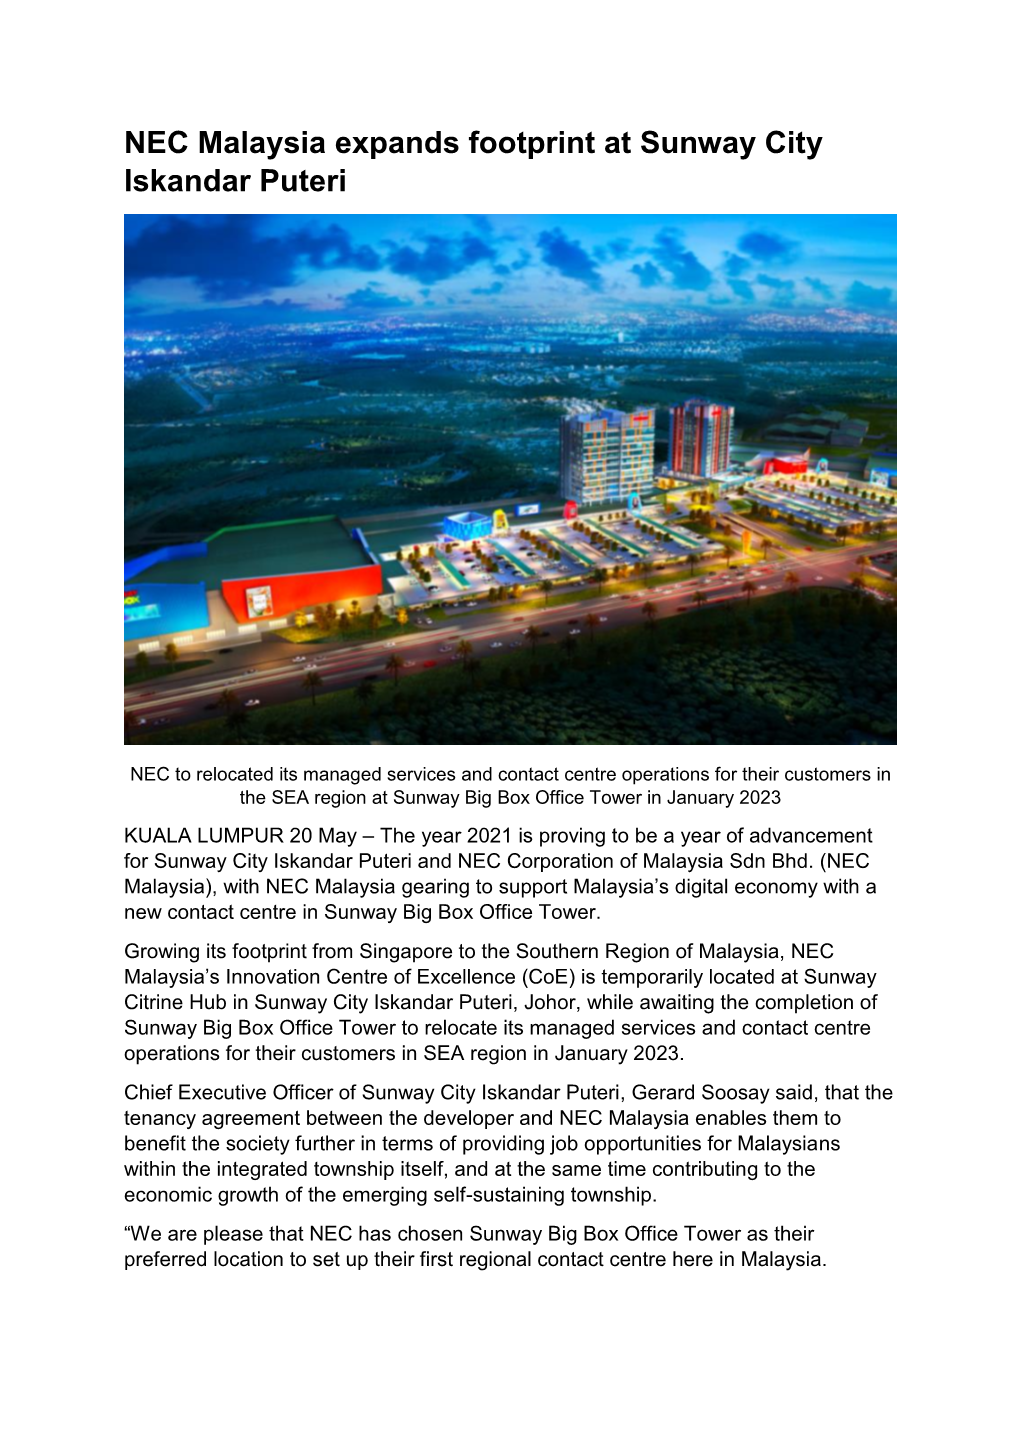 NEC Malaysia Expands Footprint at Sunway City Iskandar Puteri